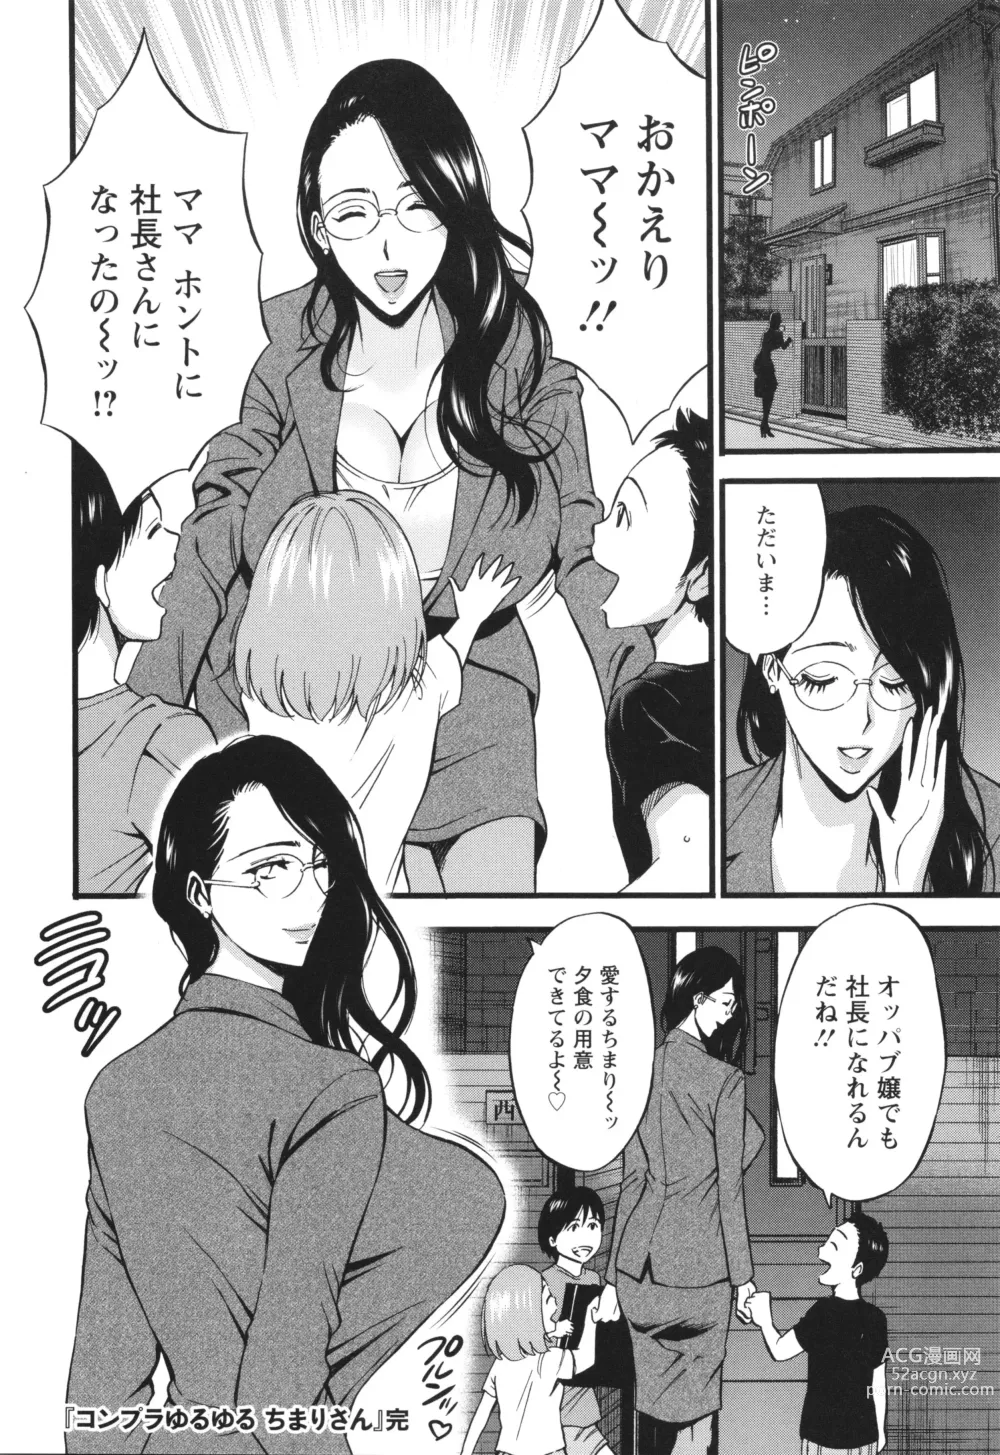 Page 192 of manga Compla Yuruyuru Chimari-san  - Chimaris compliance awareness is very lax.